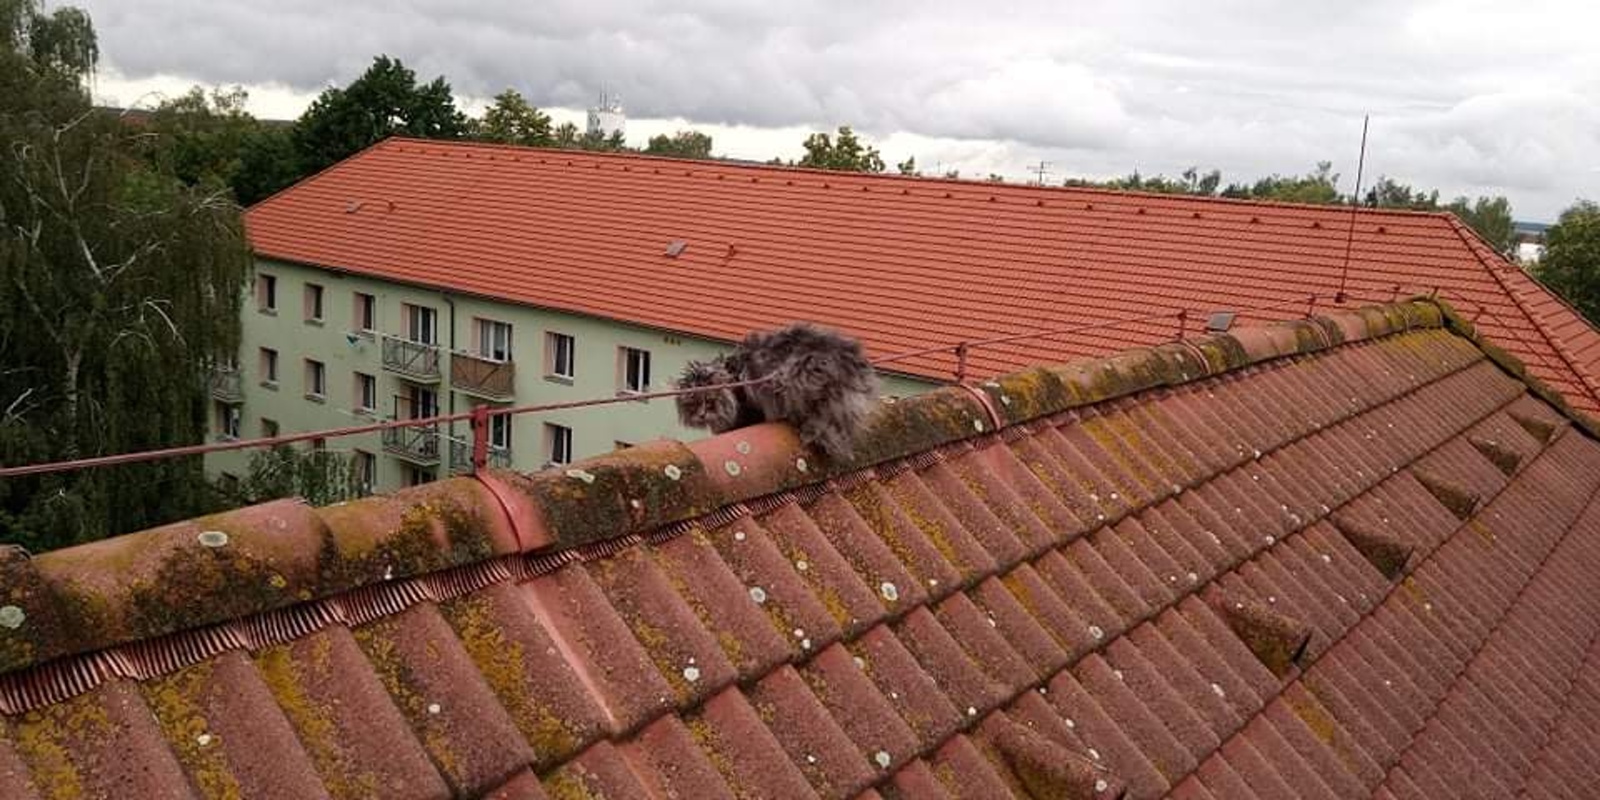 018-Kočka na střeše.jpg